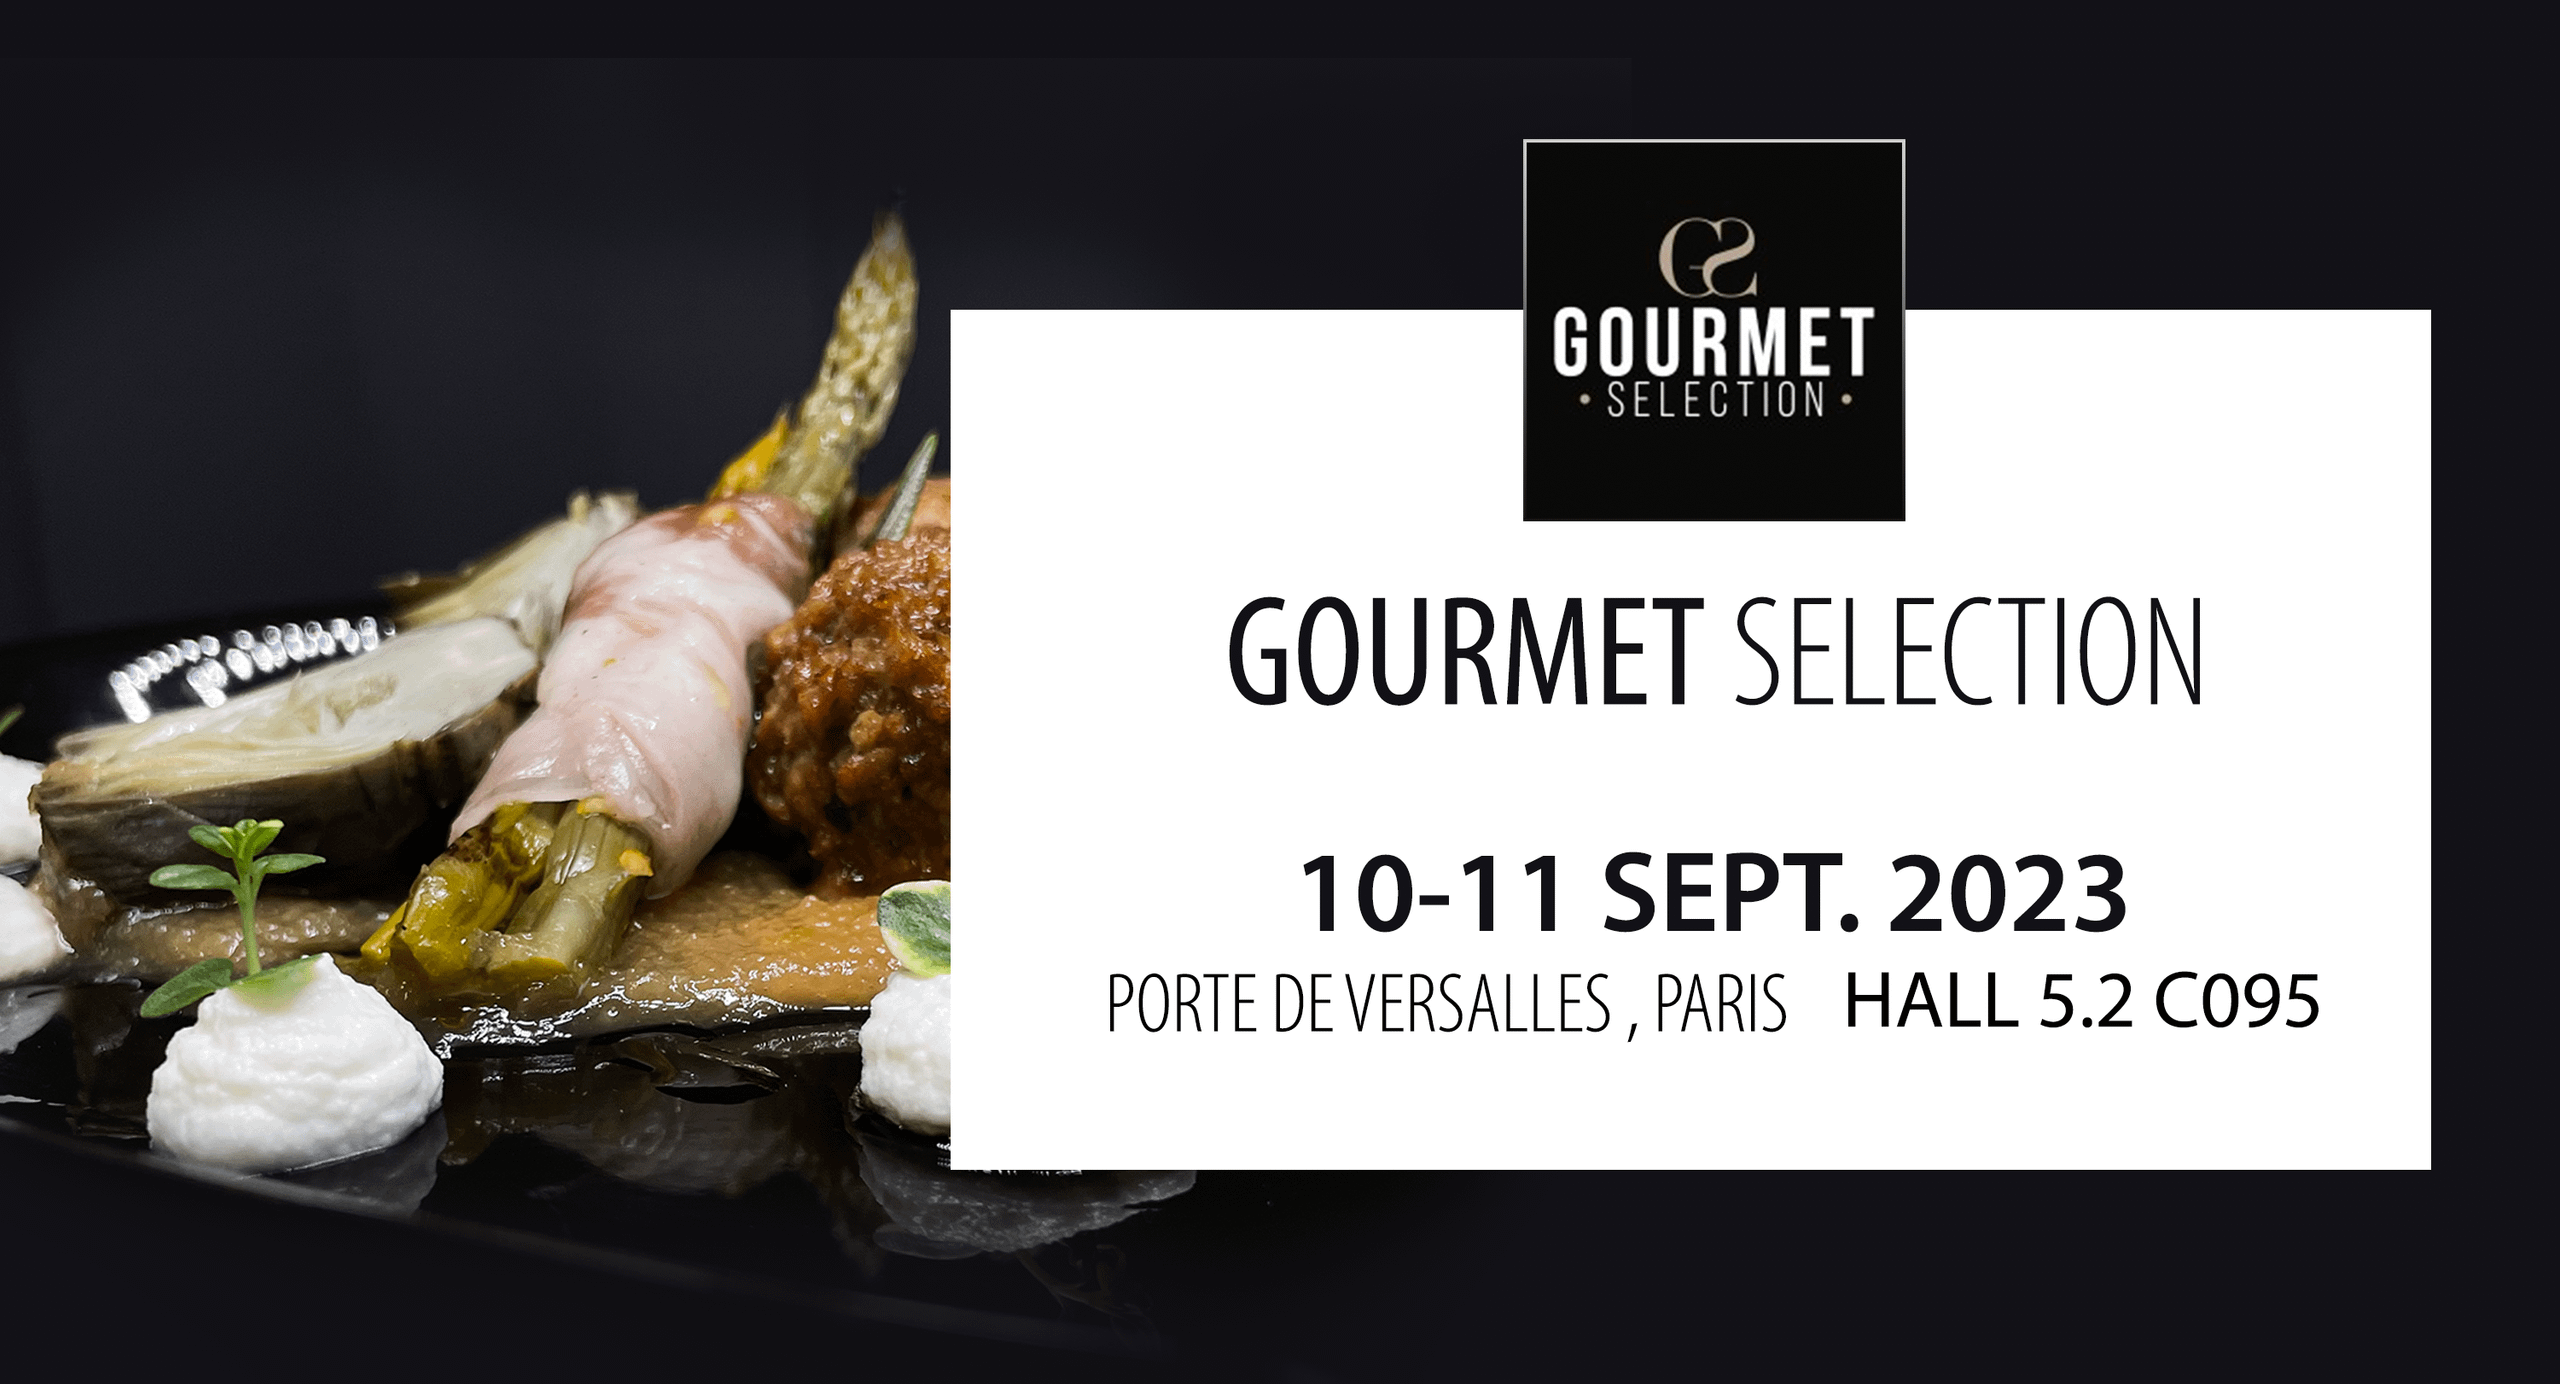 10-11 Sept. 2023 Paris, France. Gourmet Selection Expo.